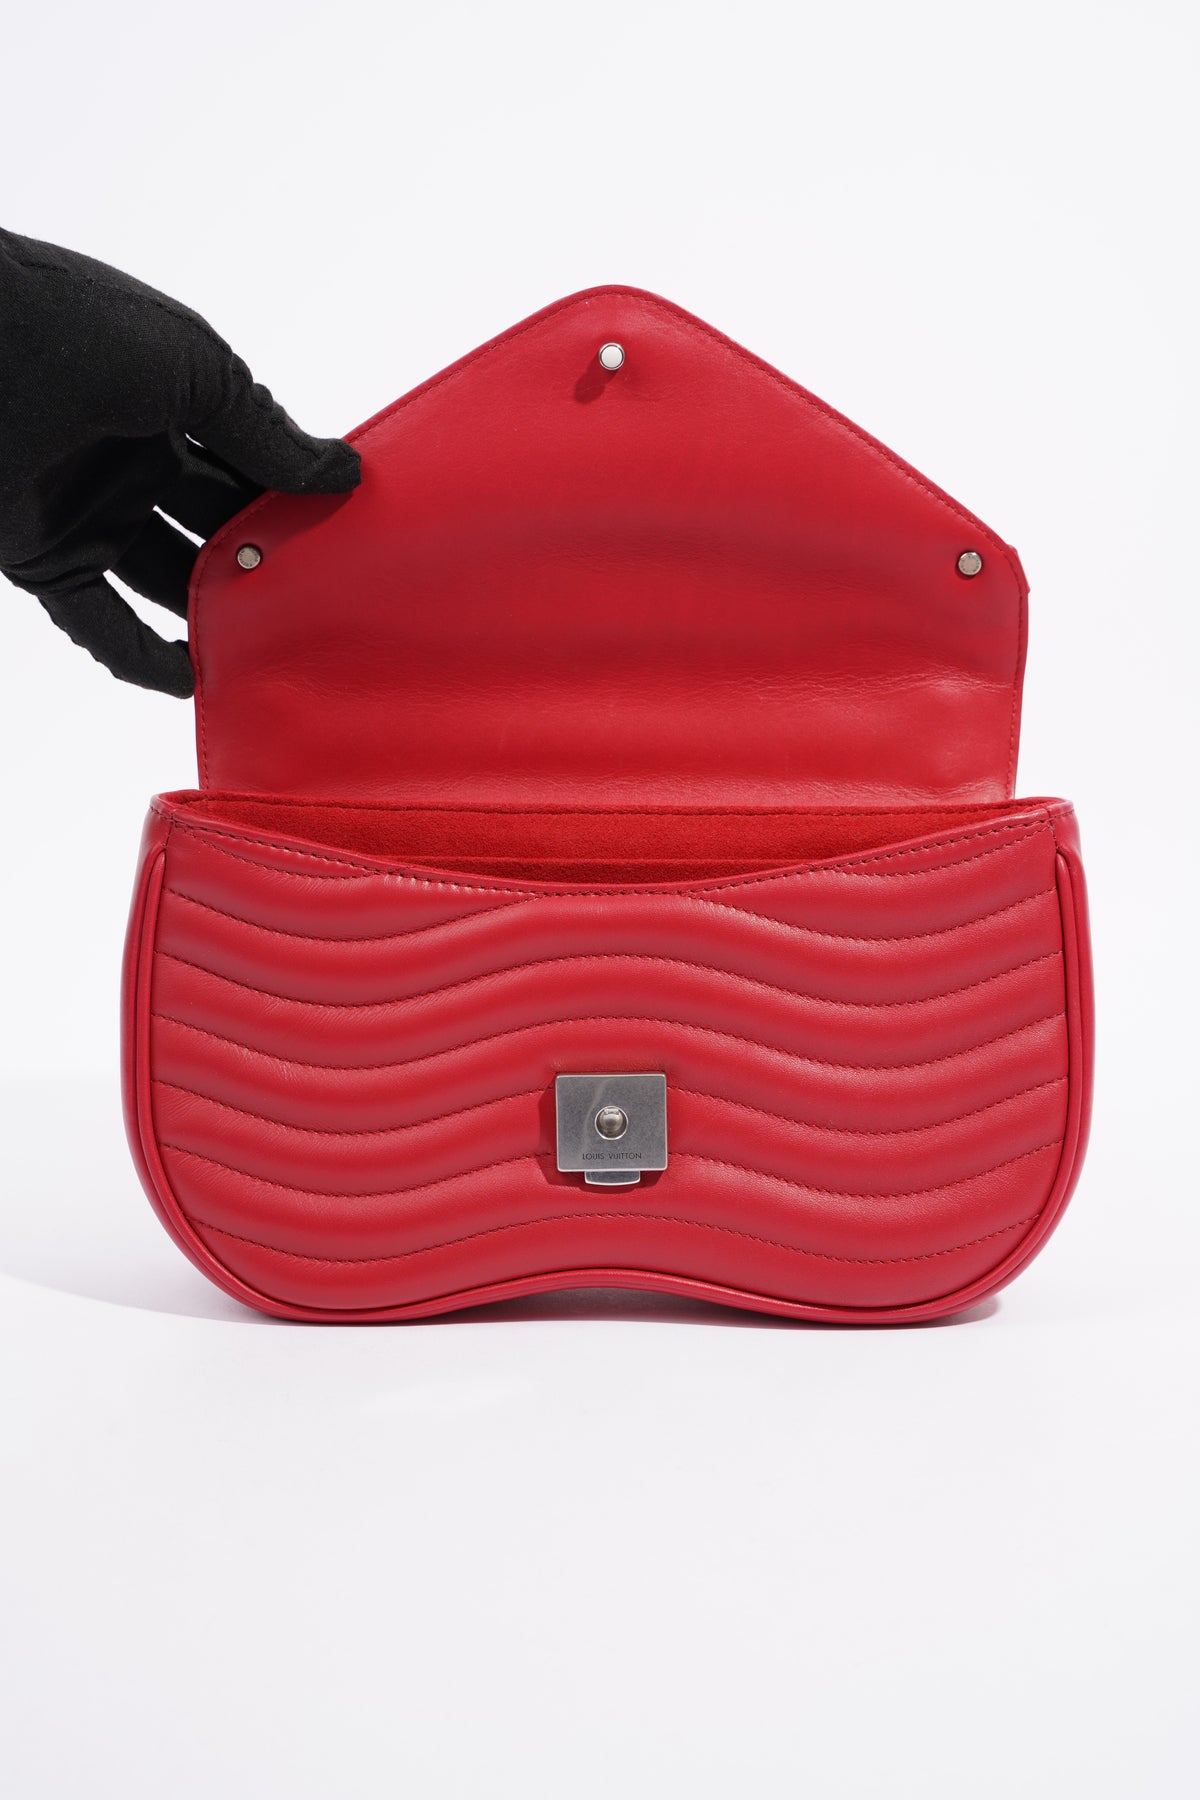 Louis Vuitton, Bags, Louis Vuitton New Wave Chain Bag Mm Red